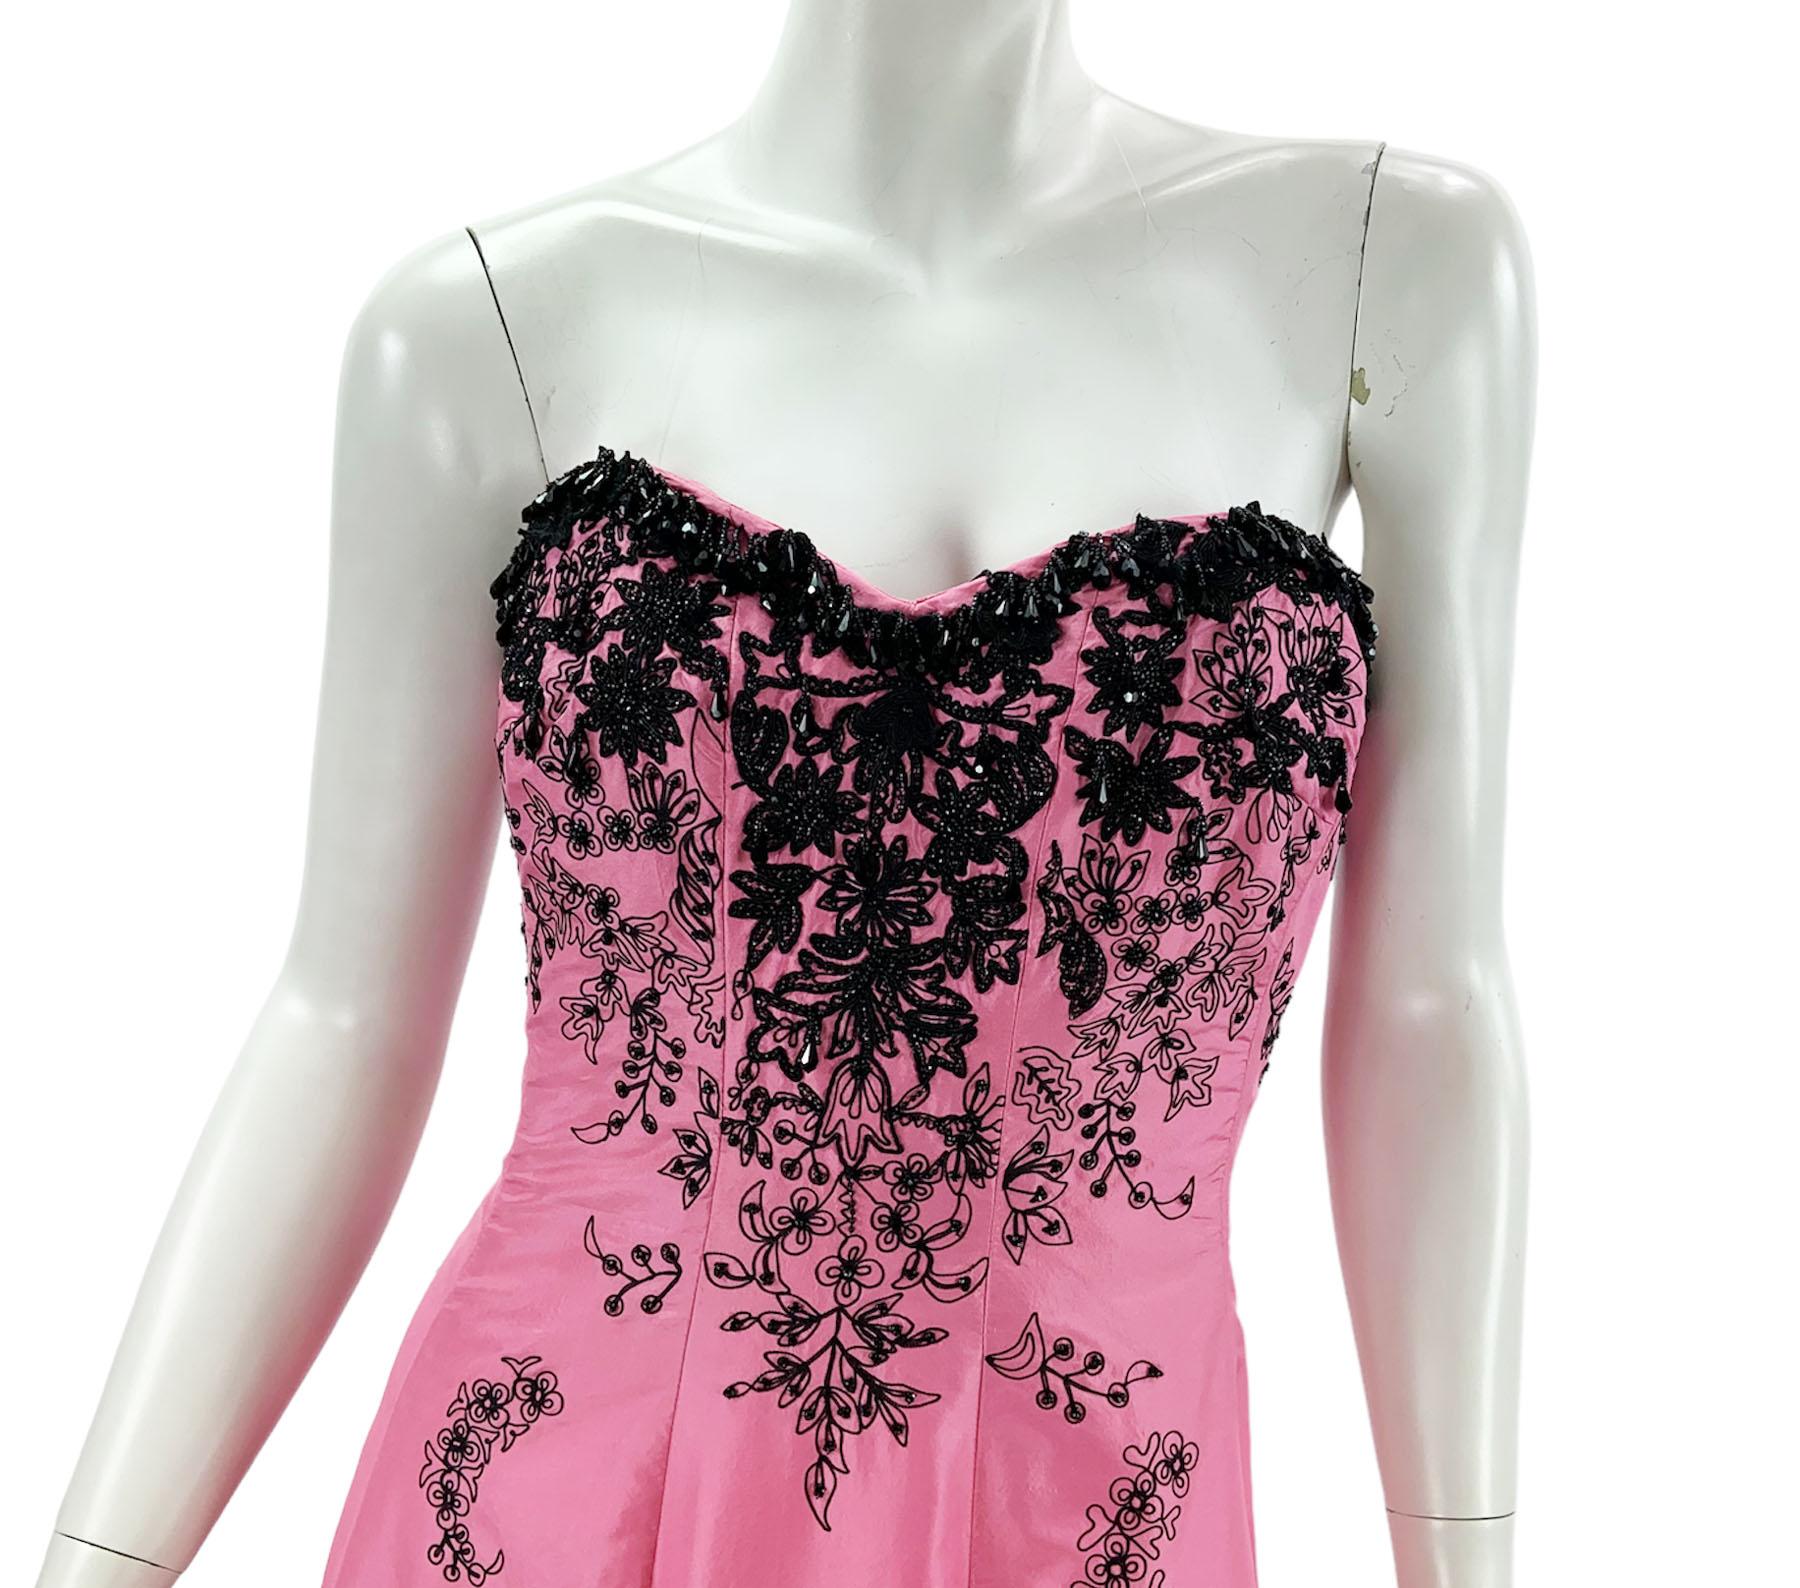 Oscar de la Renta S/S 2004 Collection Pink Silk Taffeta Embellished Dress Gown 8 For Sale 3